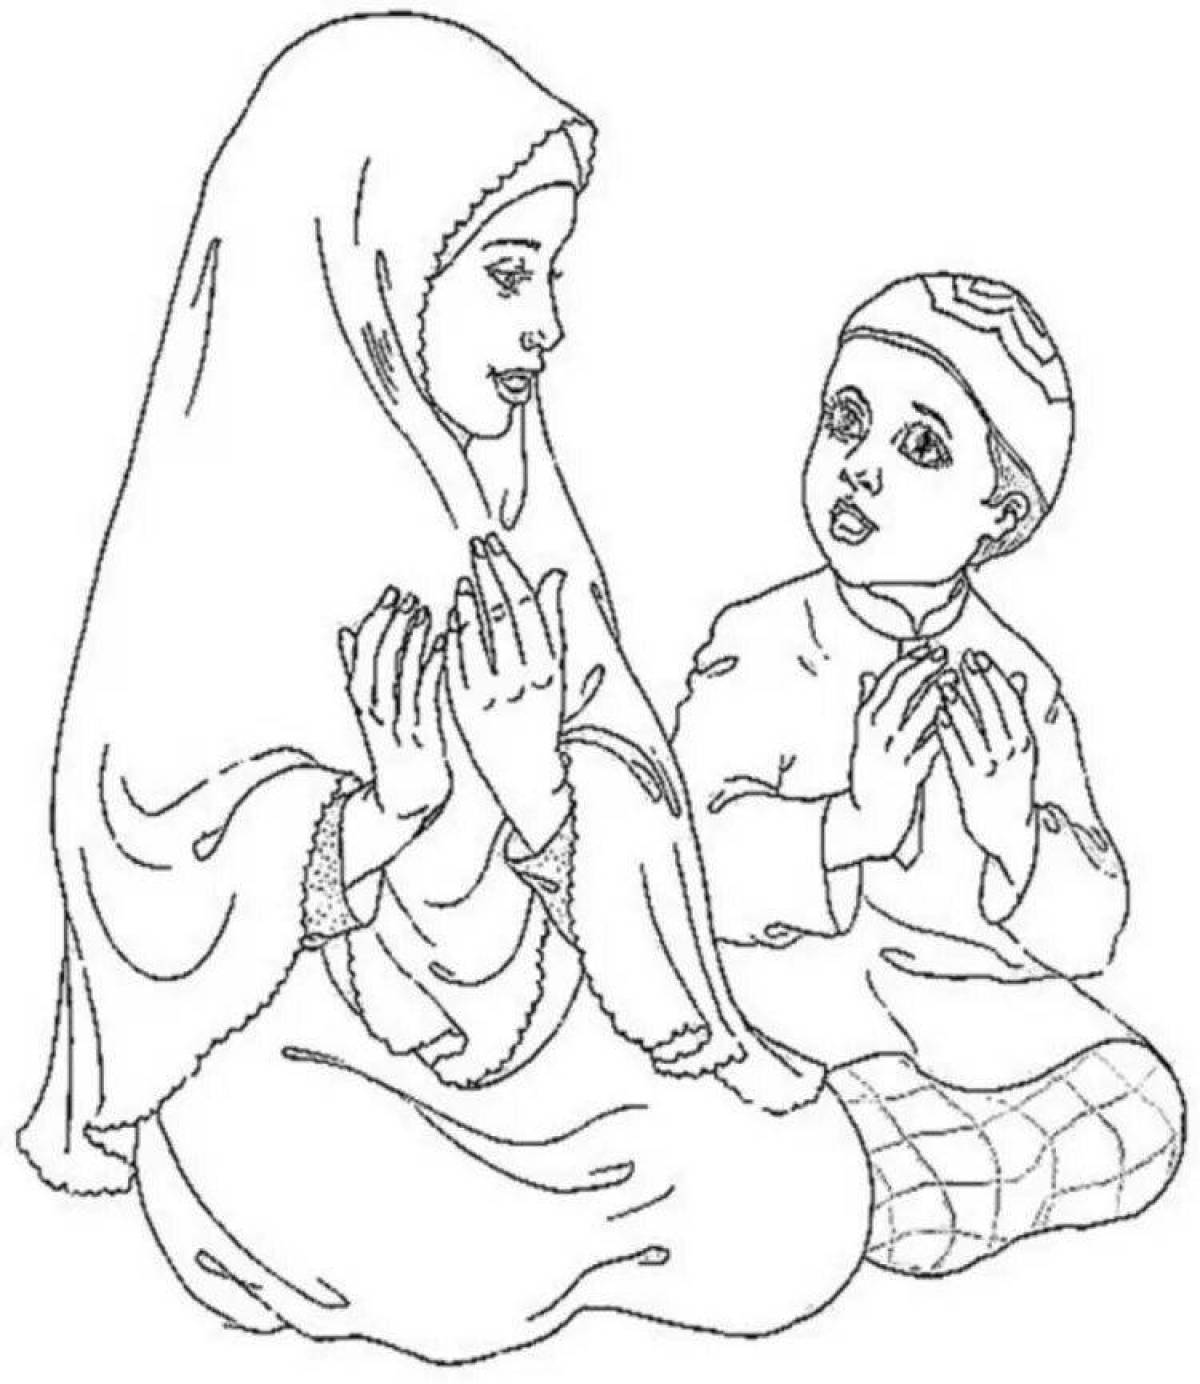 Coloring book calm muslim